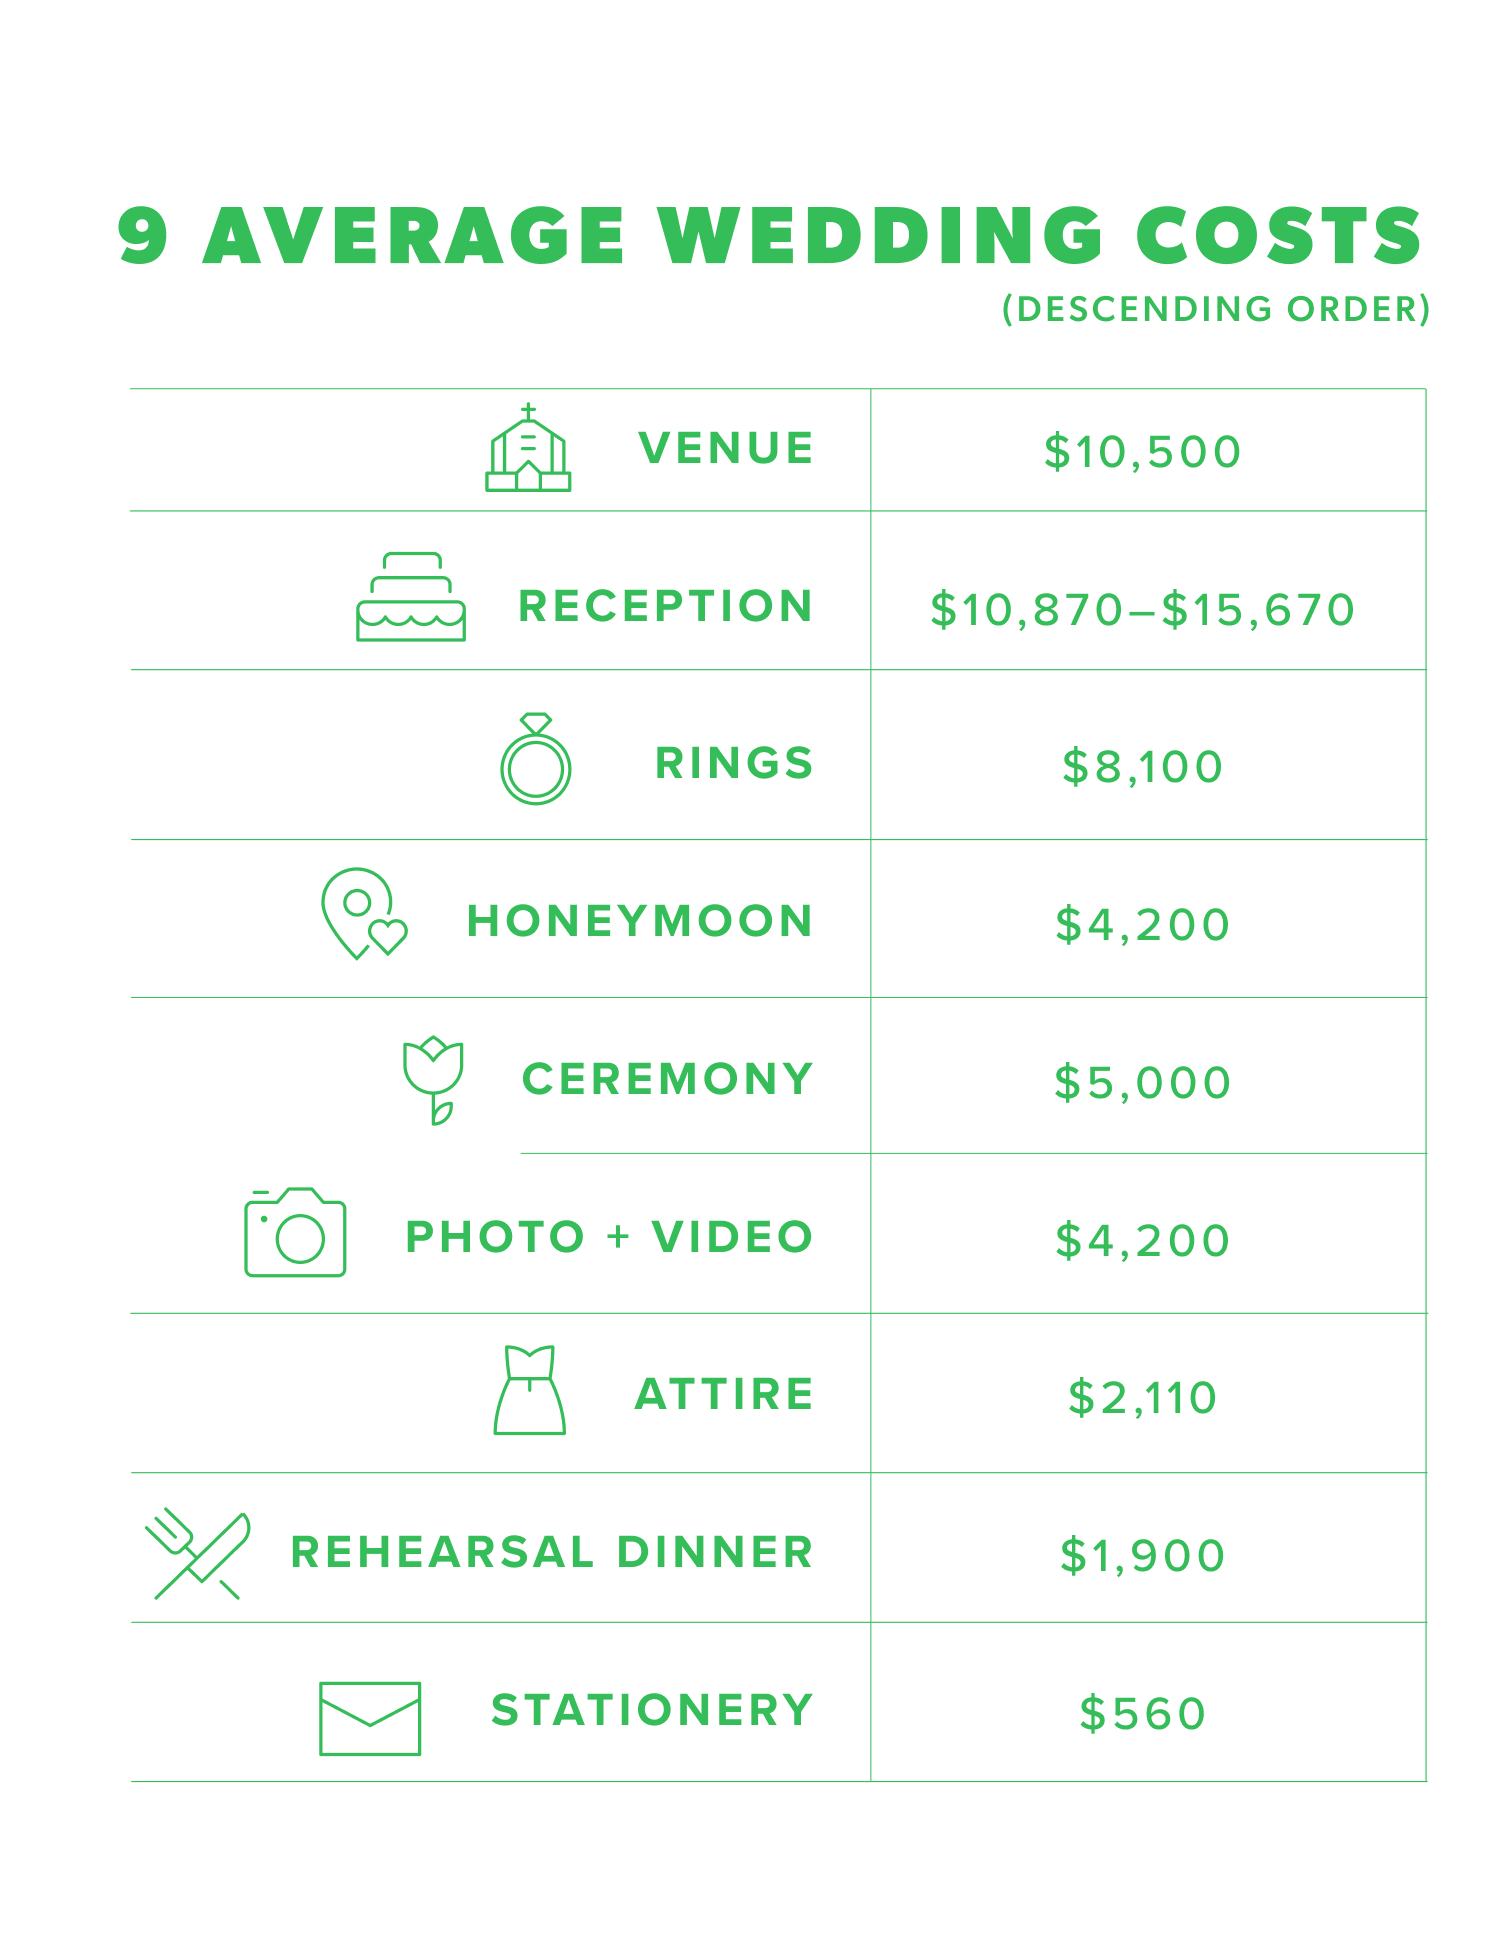 9 average wedding costs